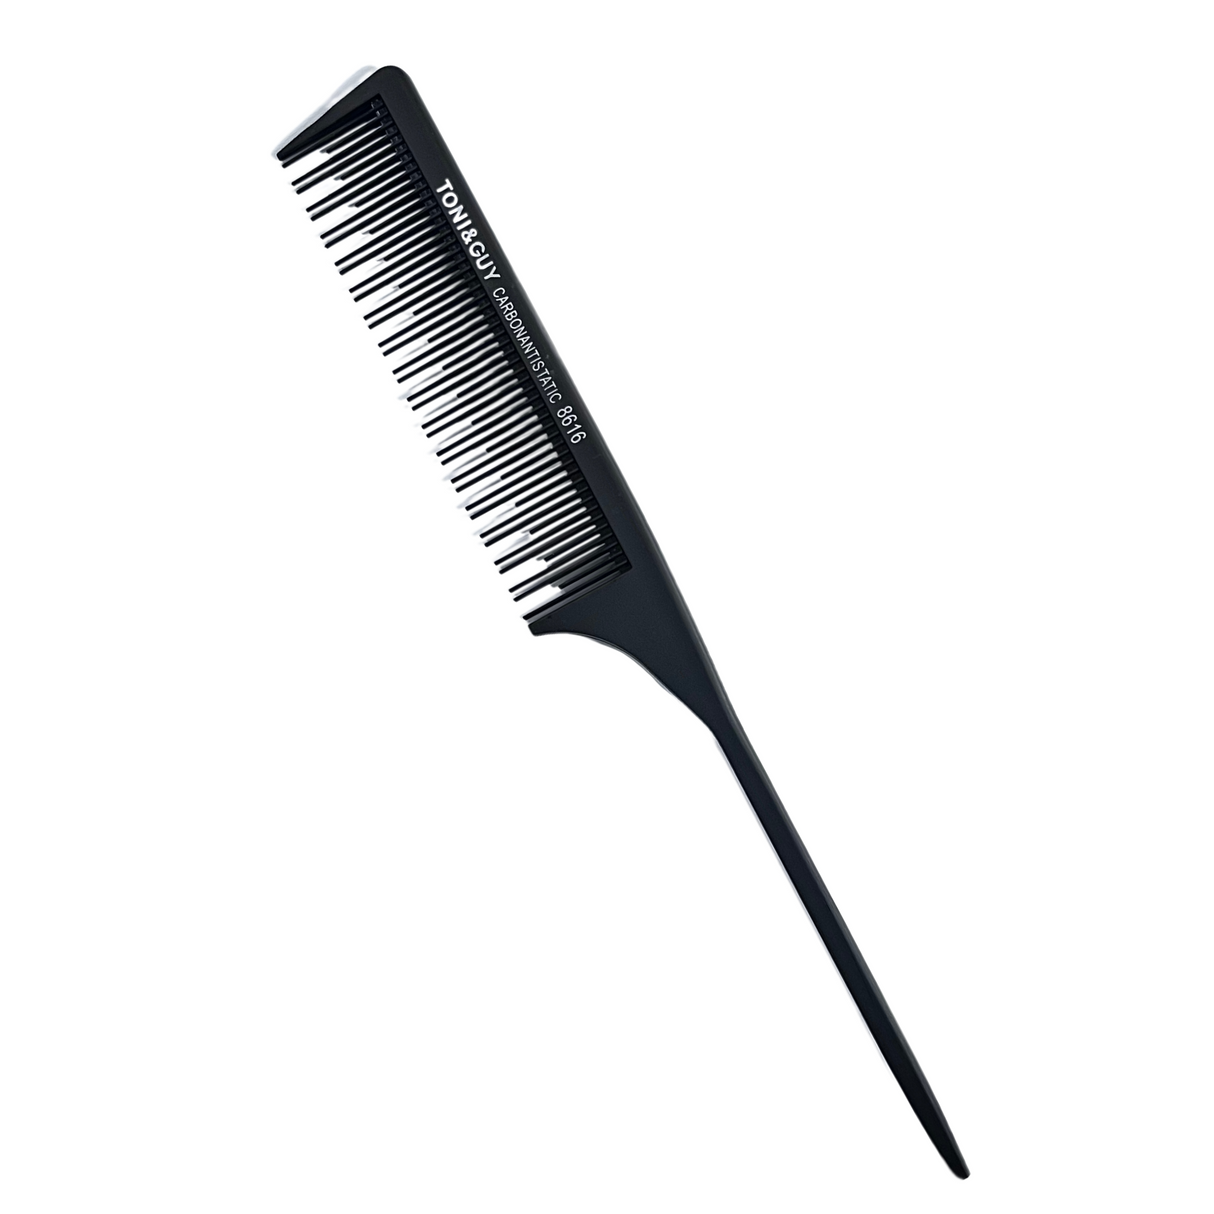 Toni&Guy CarbonAntistatic 8616 Short and long Teeth’s Hair Comb